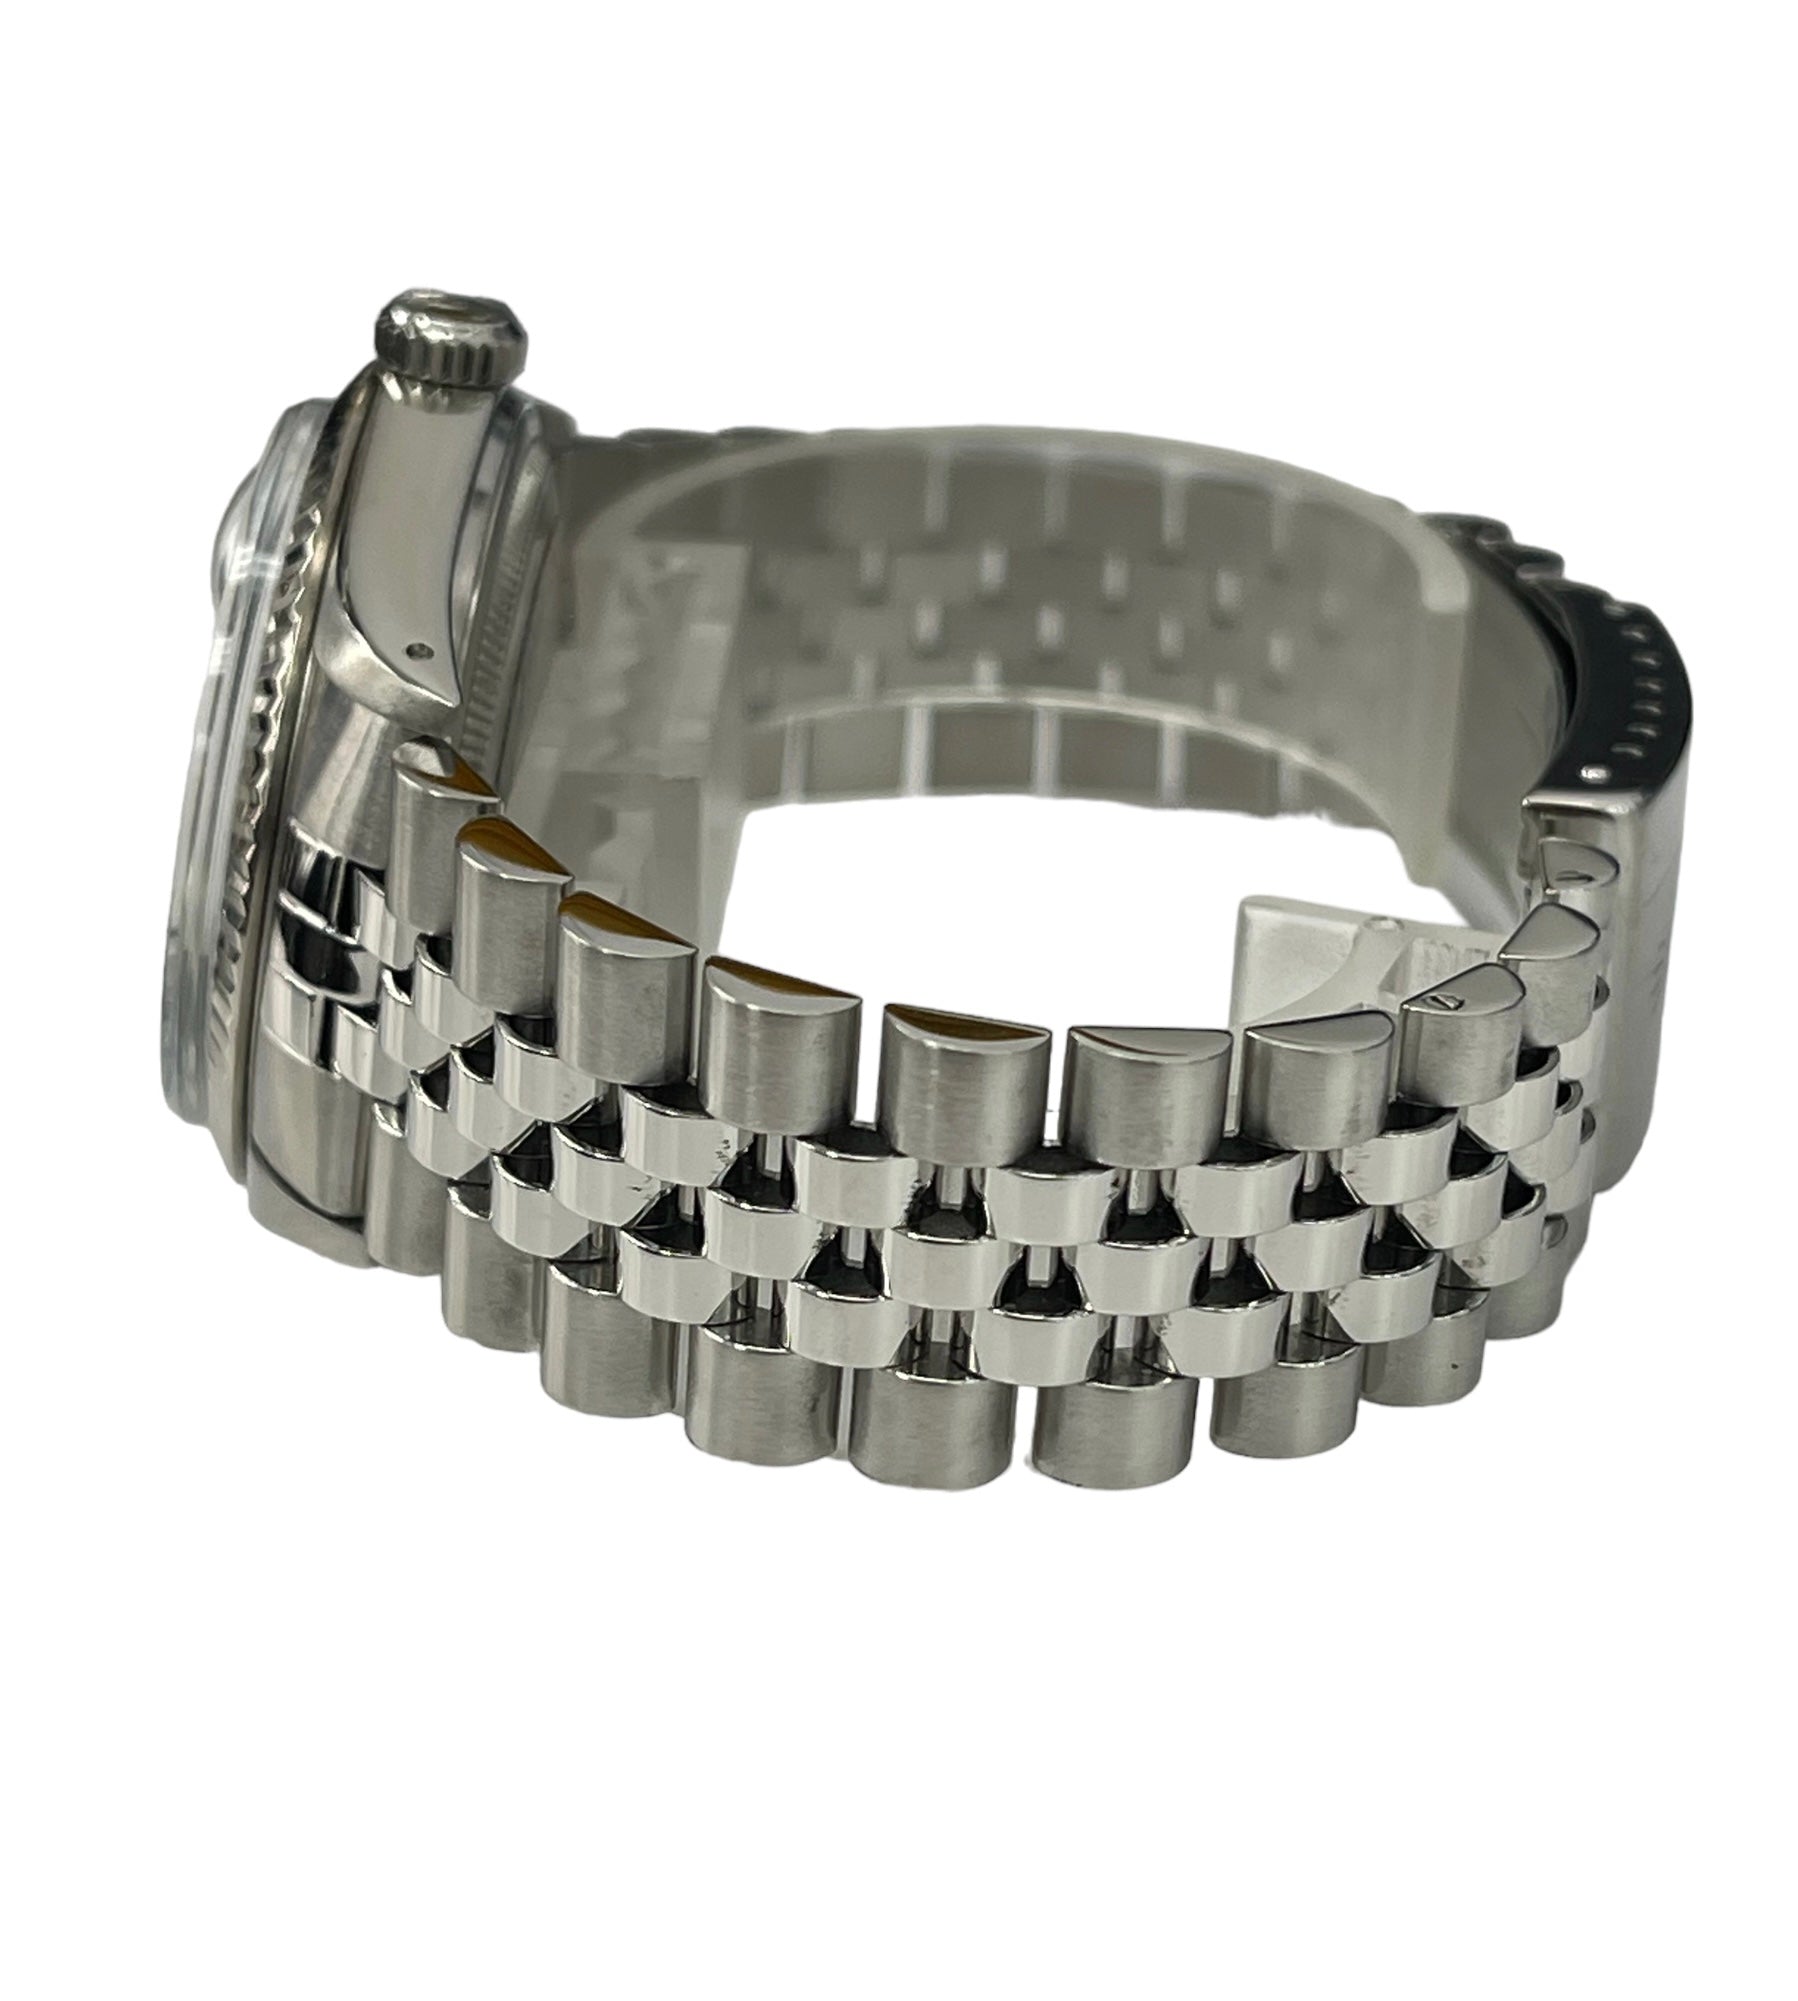 Rolex 36mm Jubilee Datejust Watch Stainless Steel Factory Dial Ref# 16014